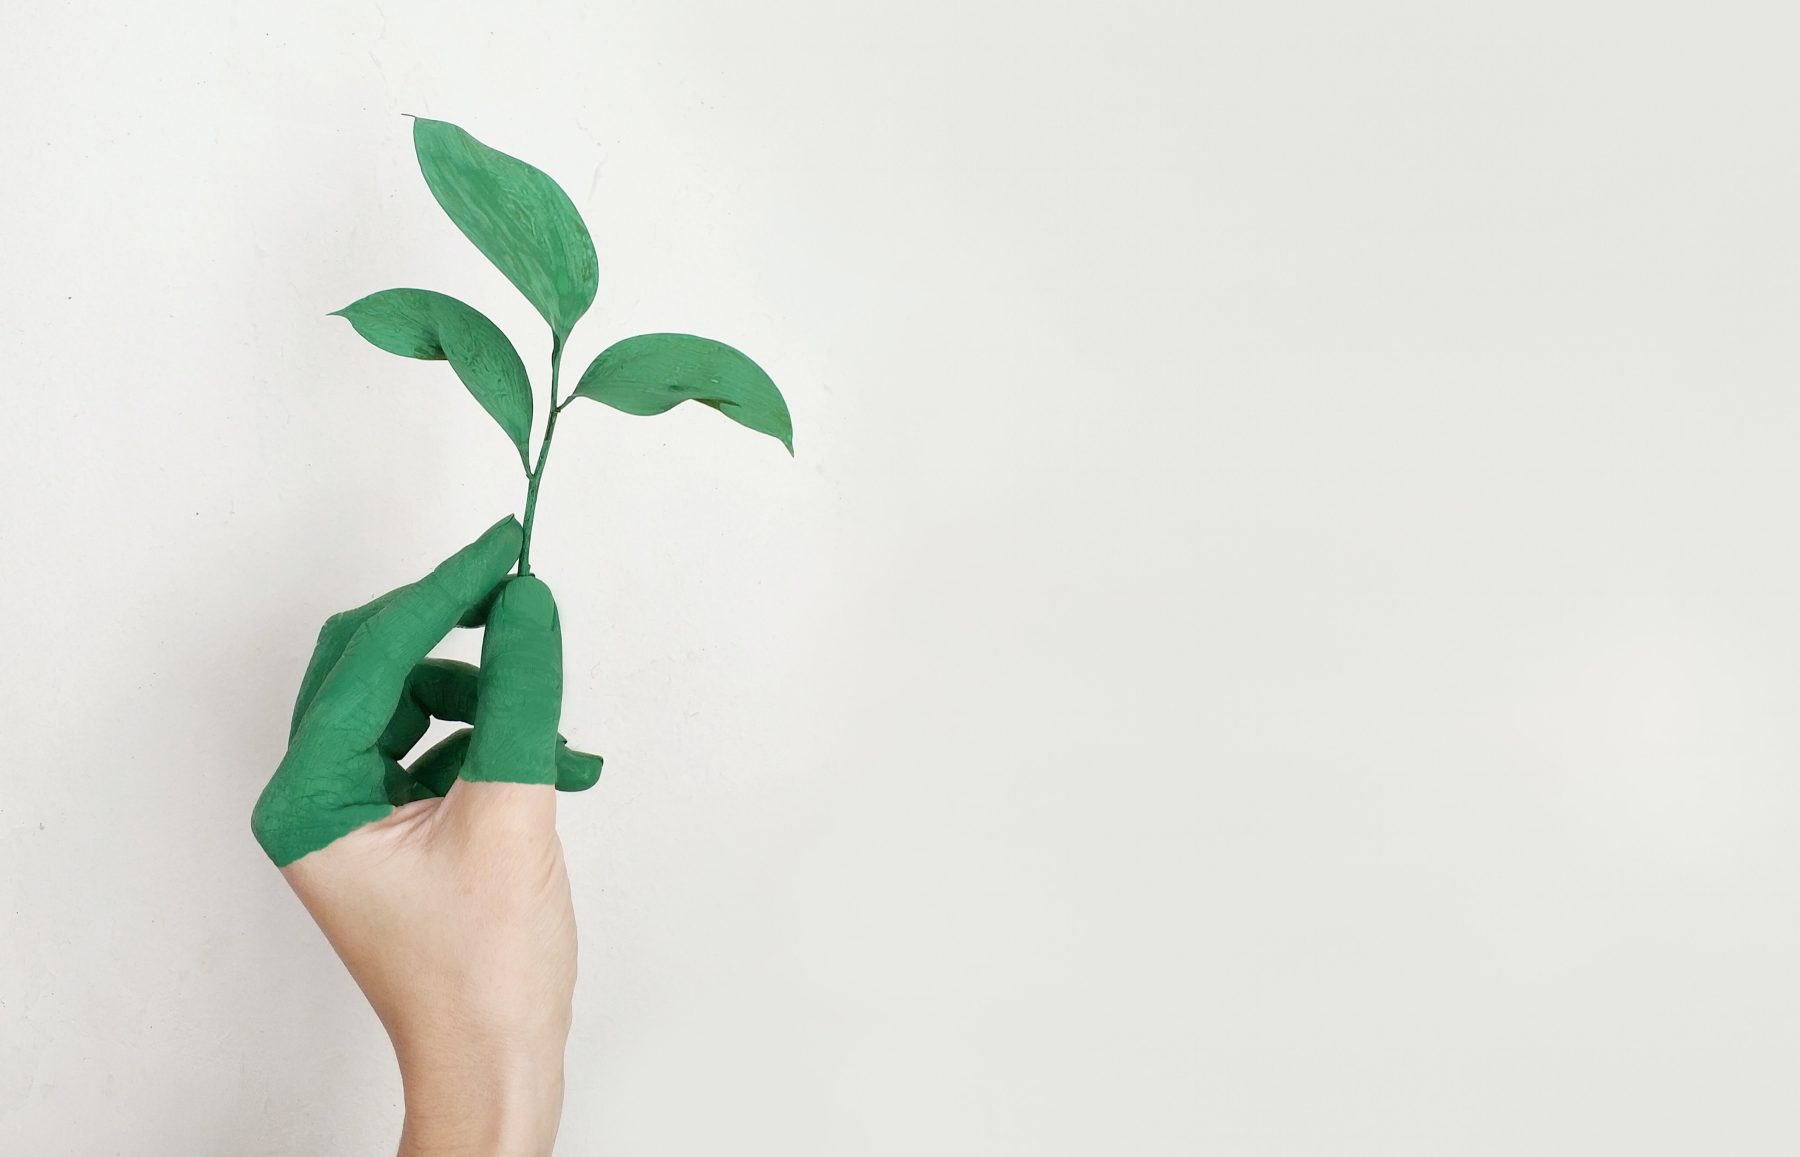 A hand holding a plant, symbolizing sustainability